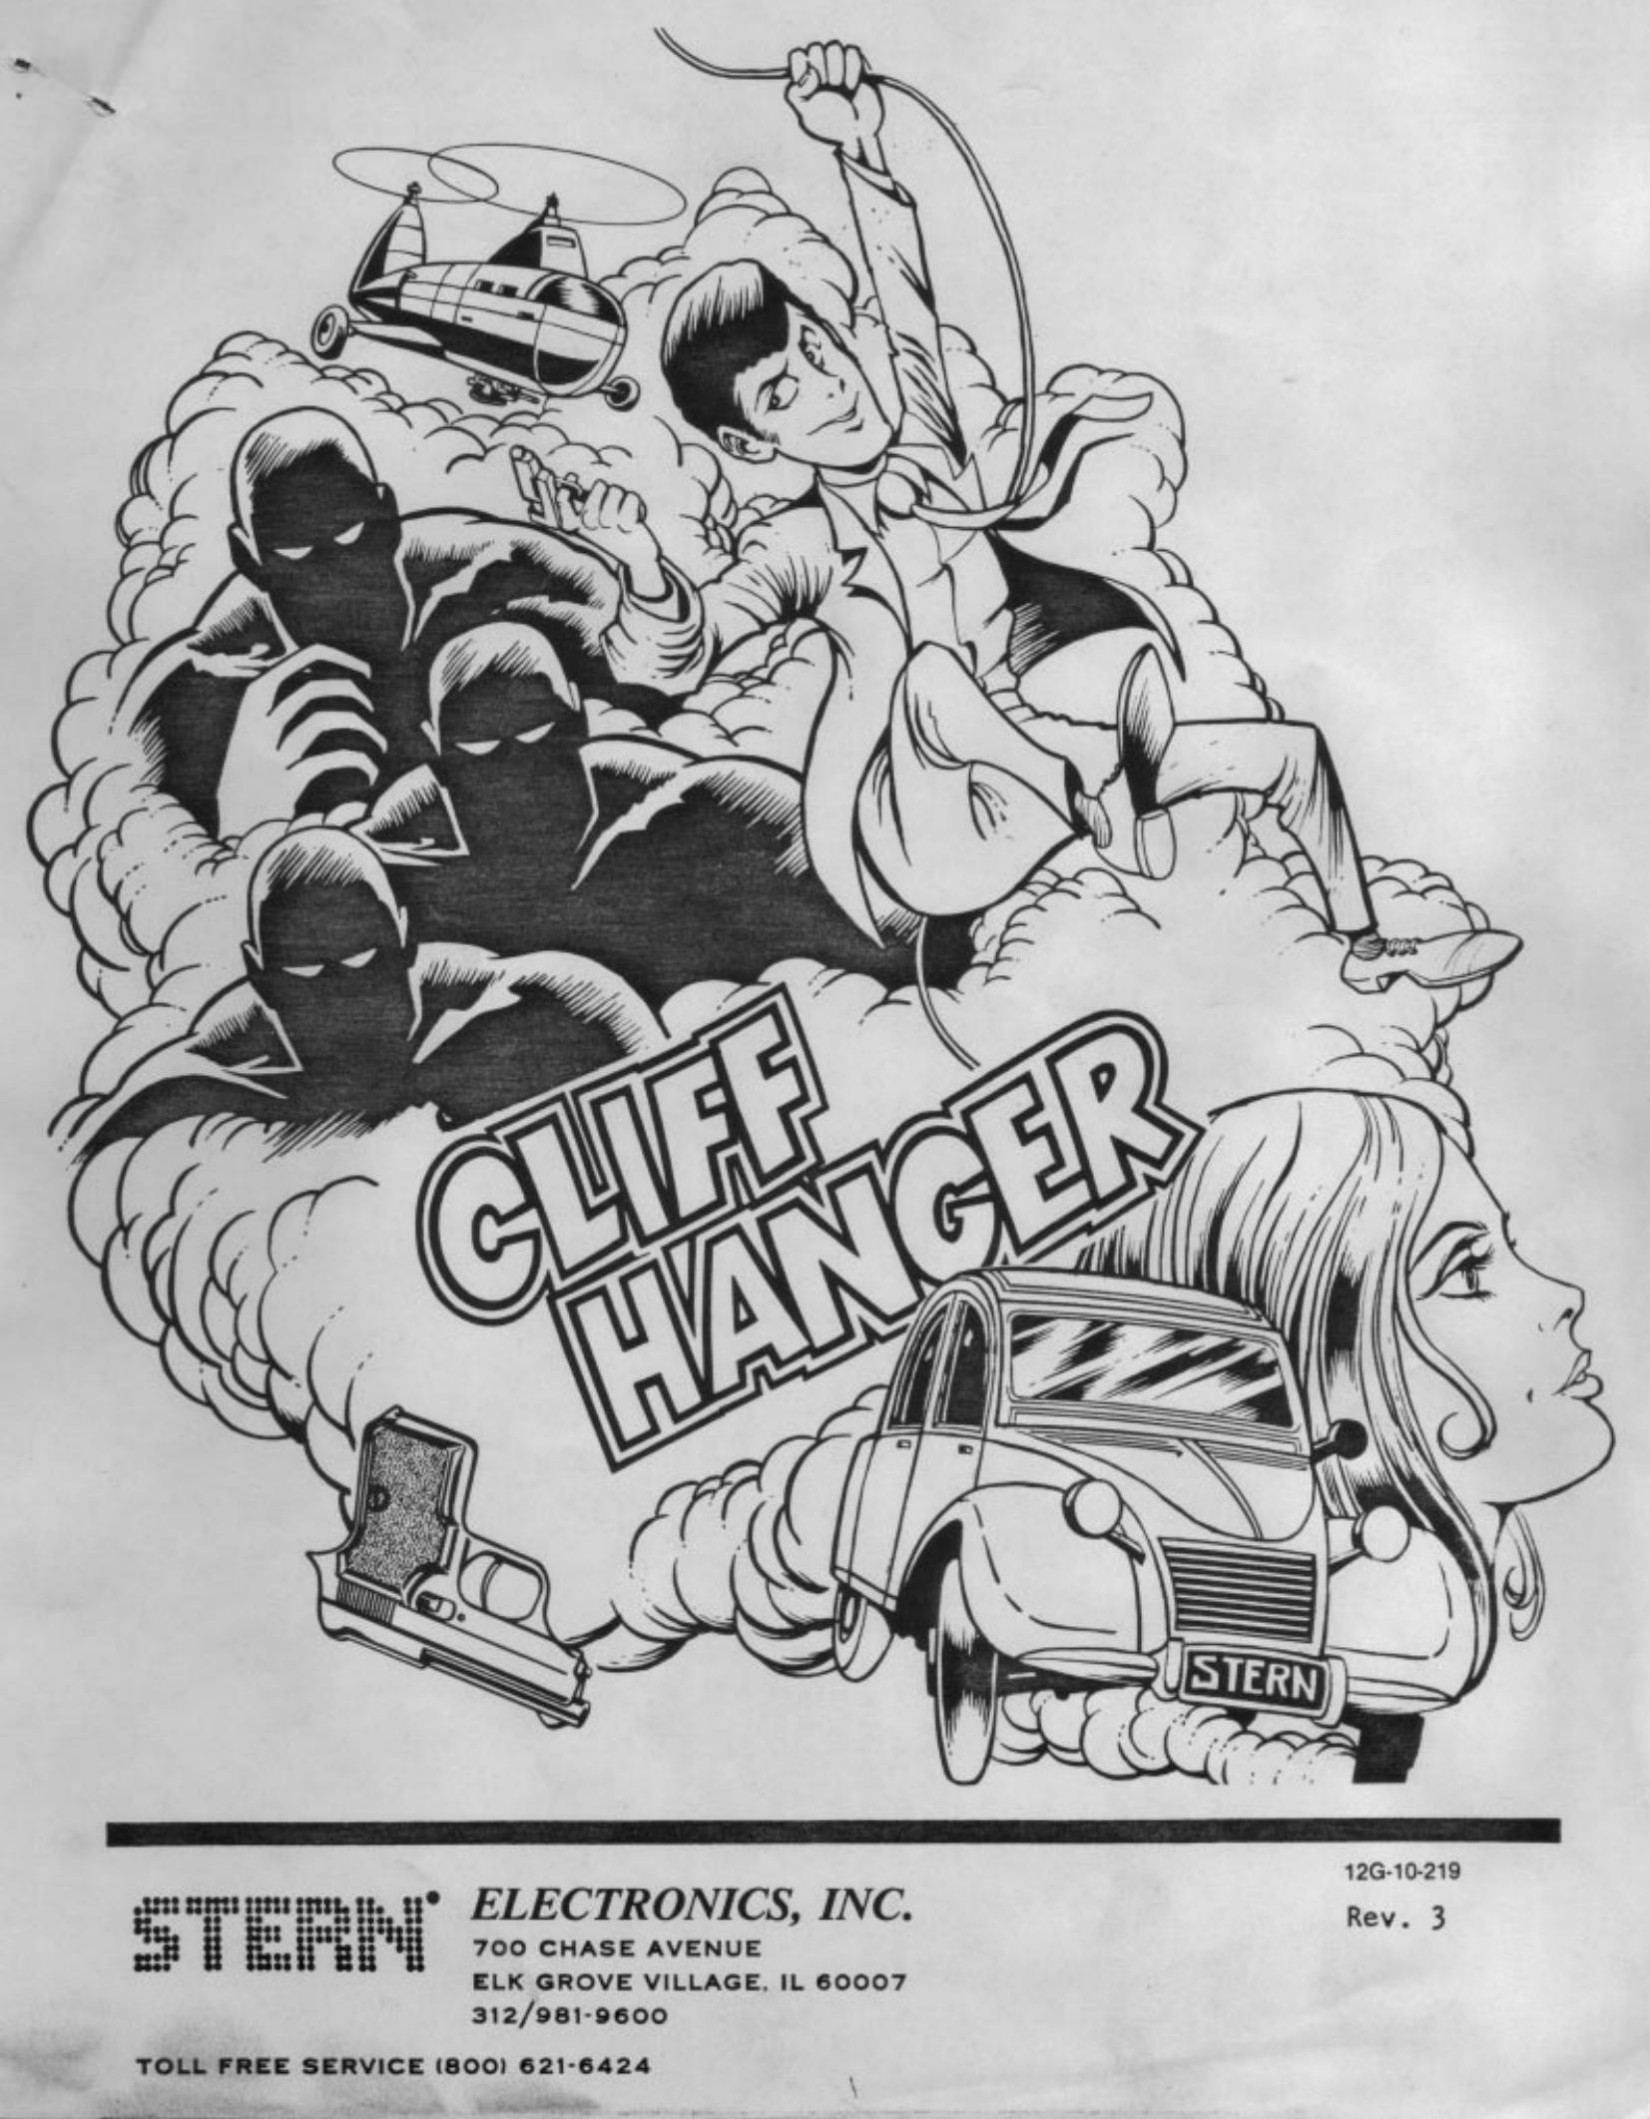 Cliff hanger manual - Rev. 3